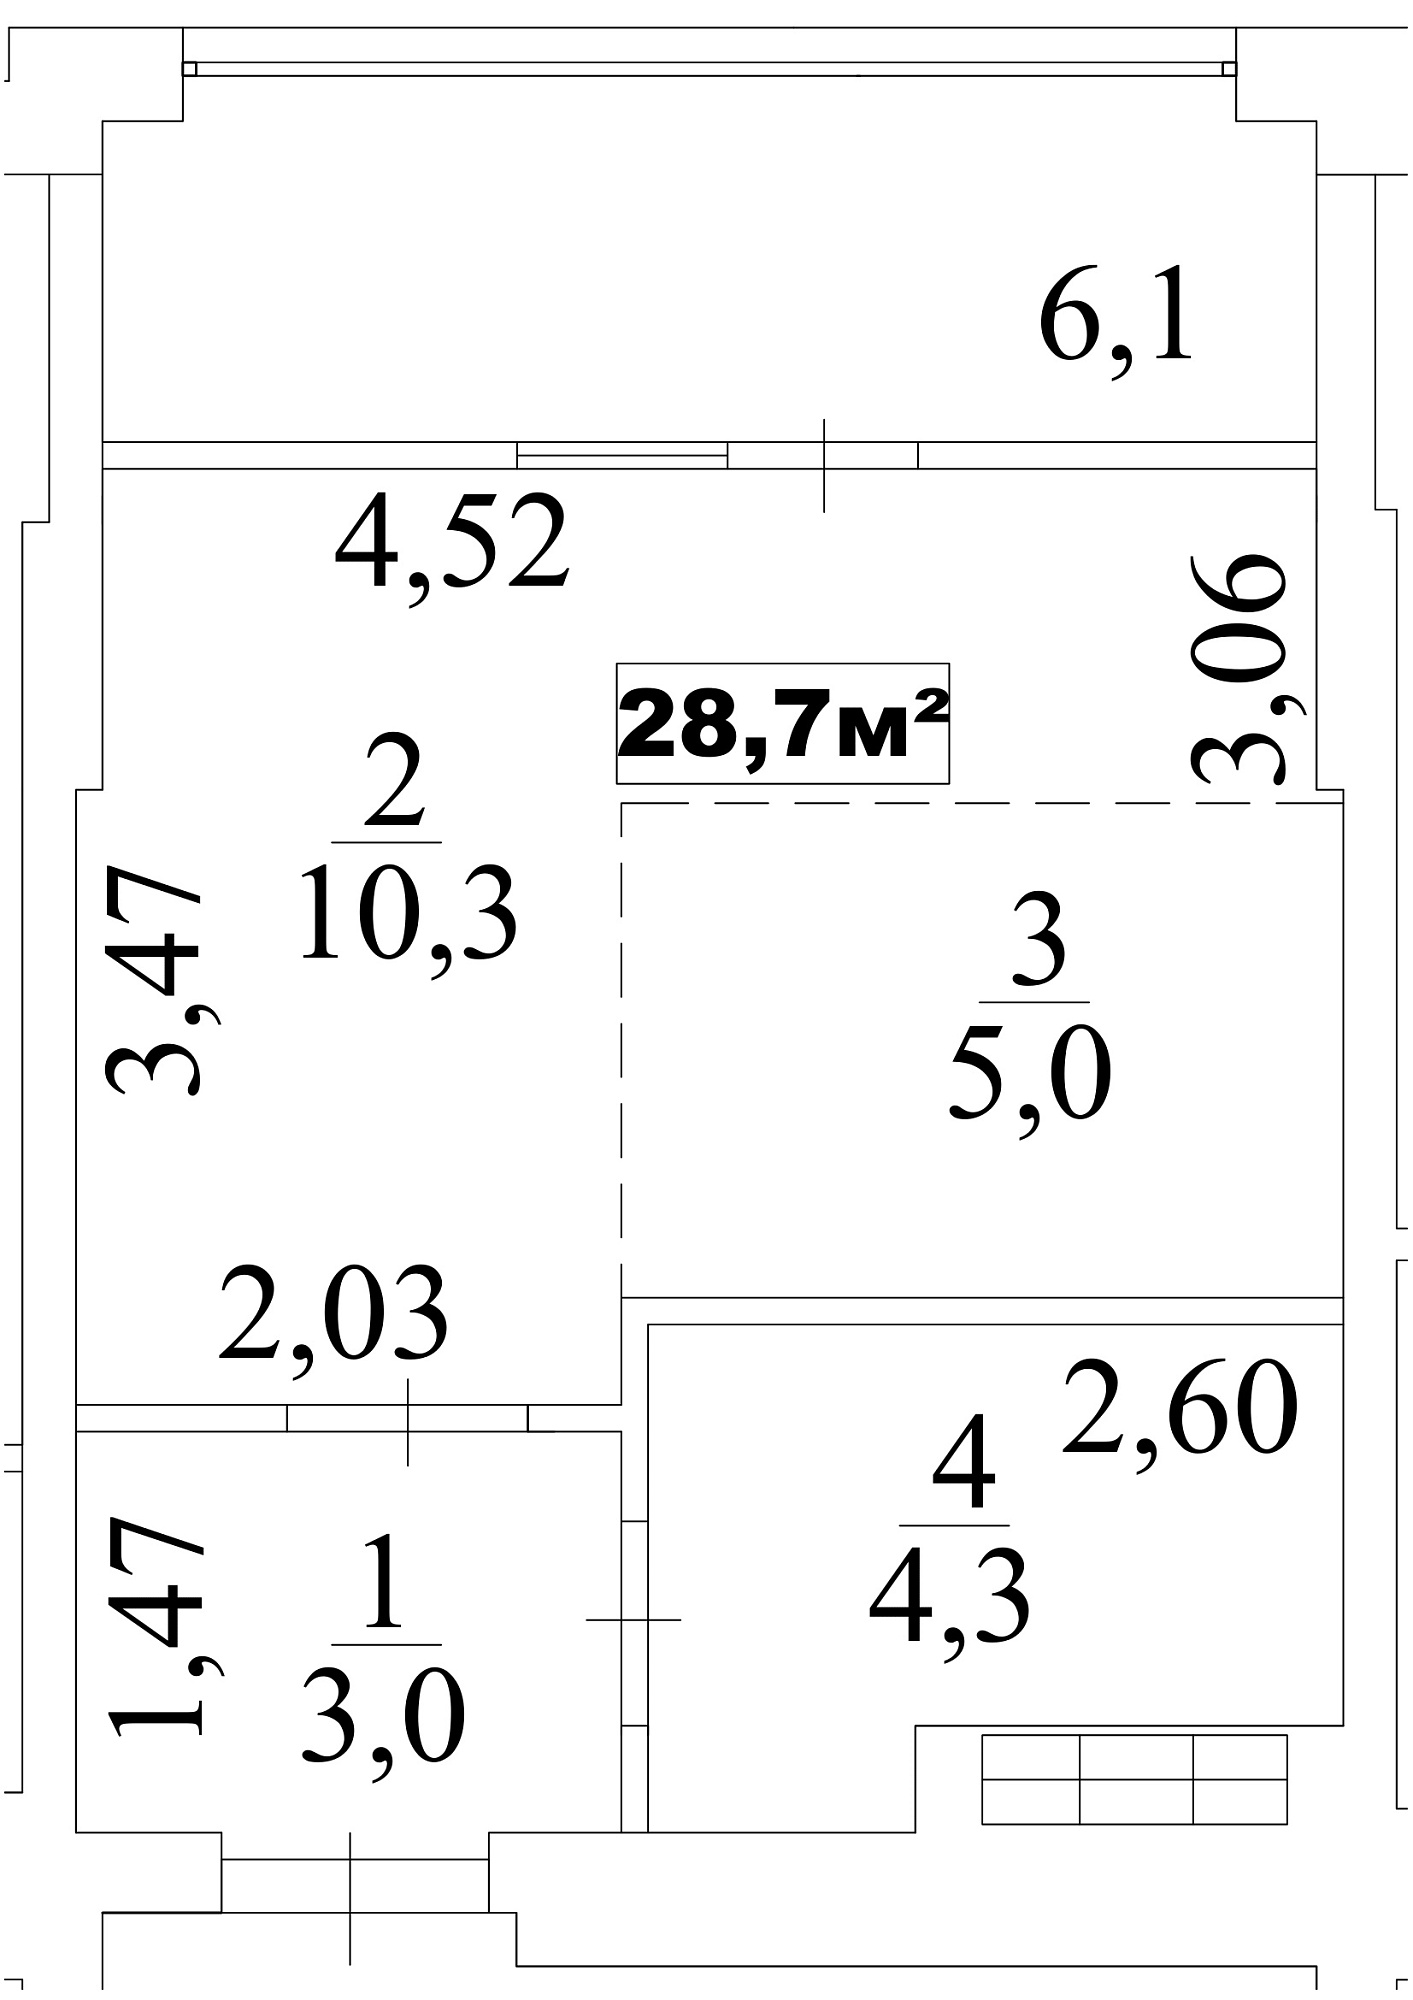 Planning Smart flats area 28.7m2, AB-10-01/00005.